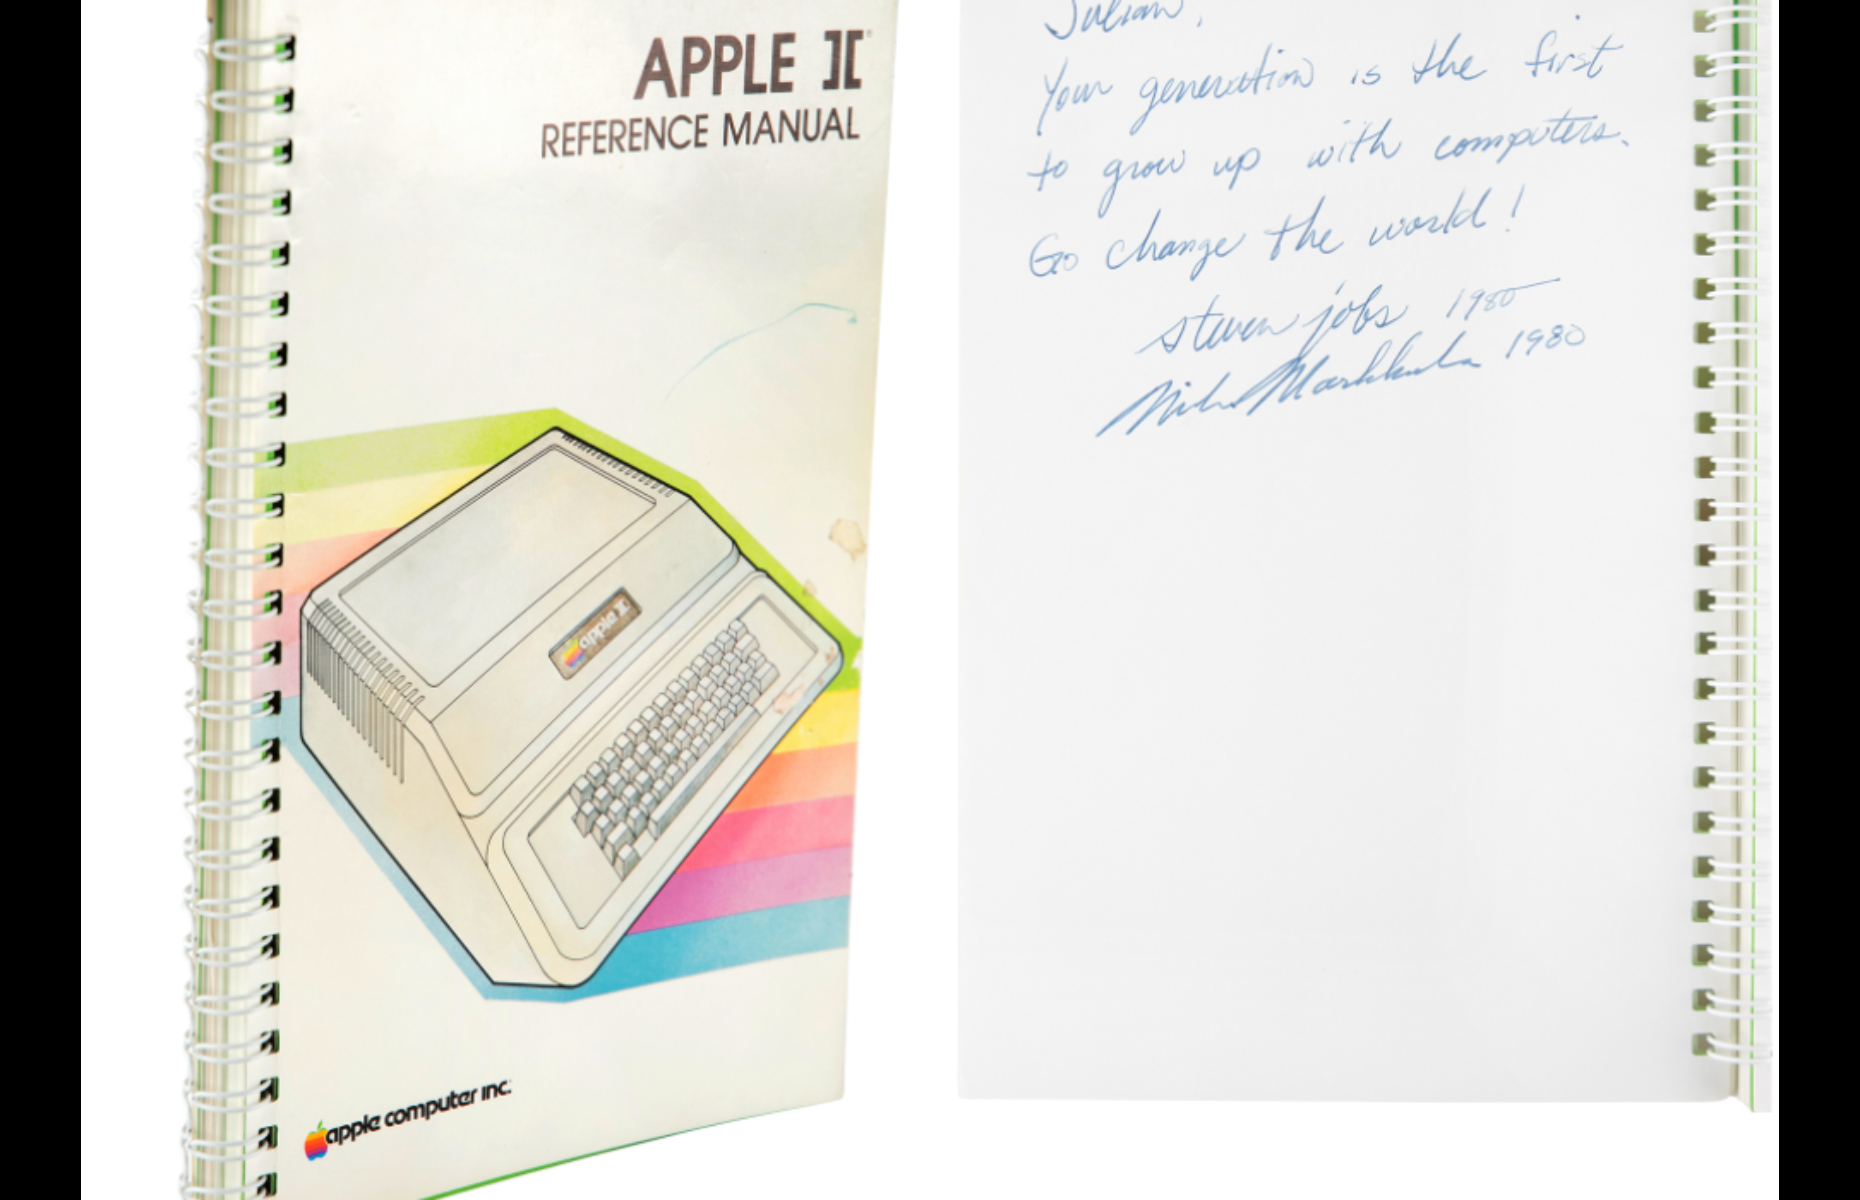 Apple II computer manual signed by Steve Jobs: $787,484 (£591k)